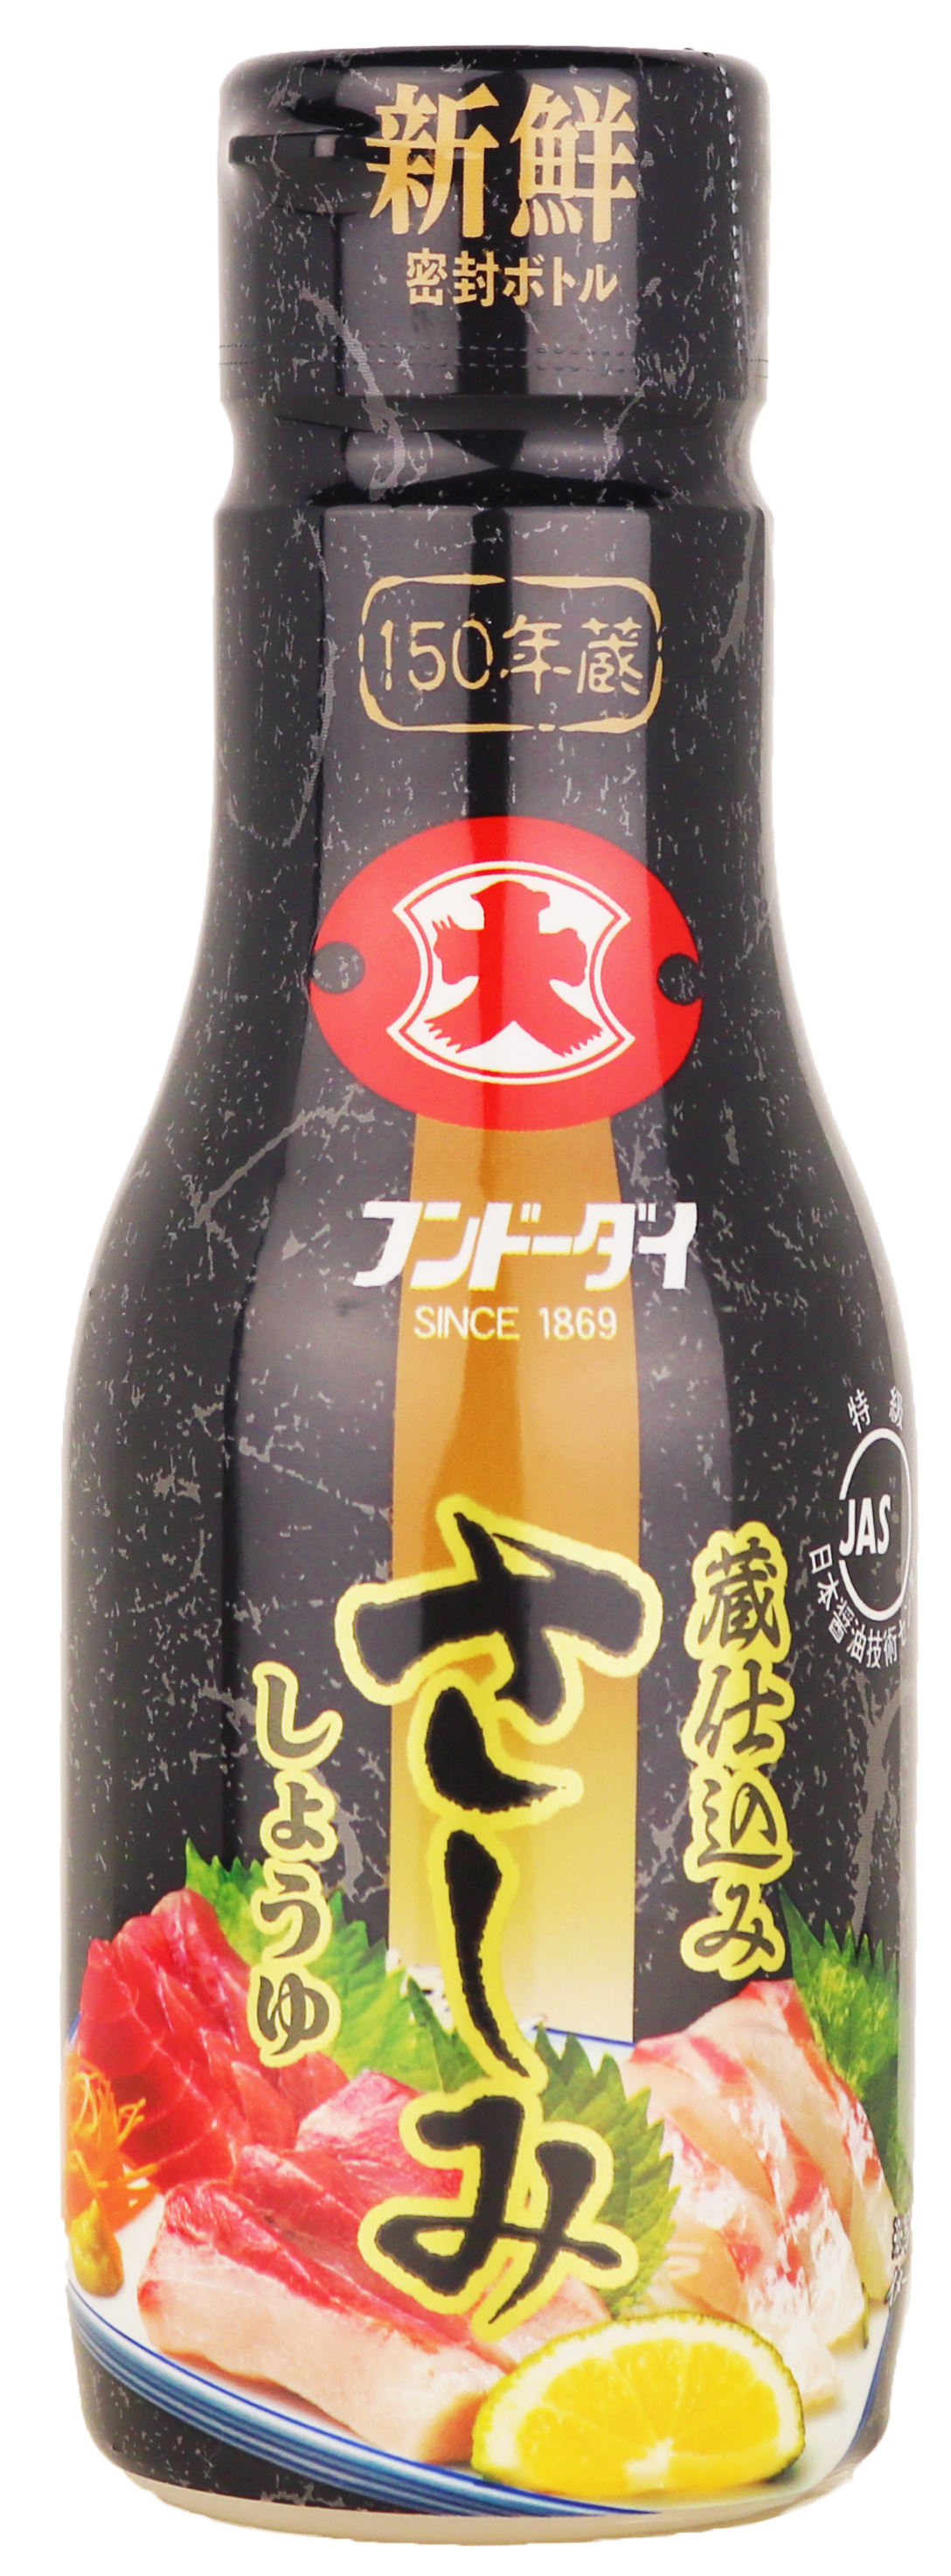 Kura-shikomi Sashimi Soy Sauce 200ml Sealed Bottle